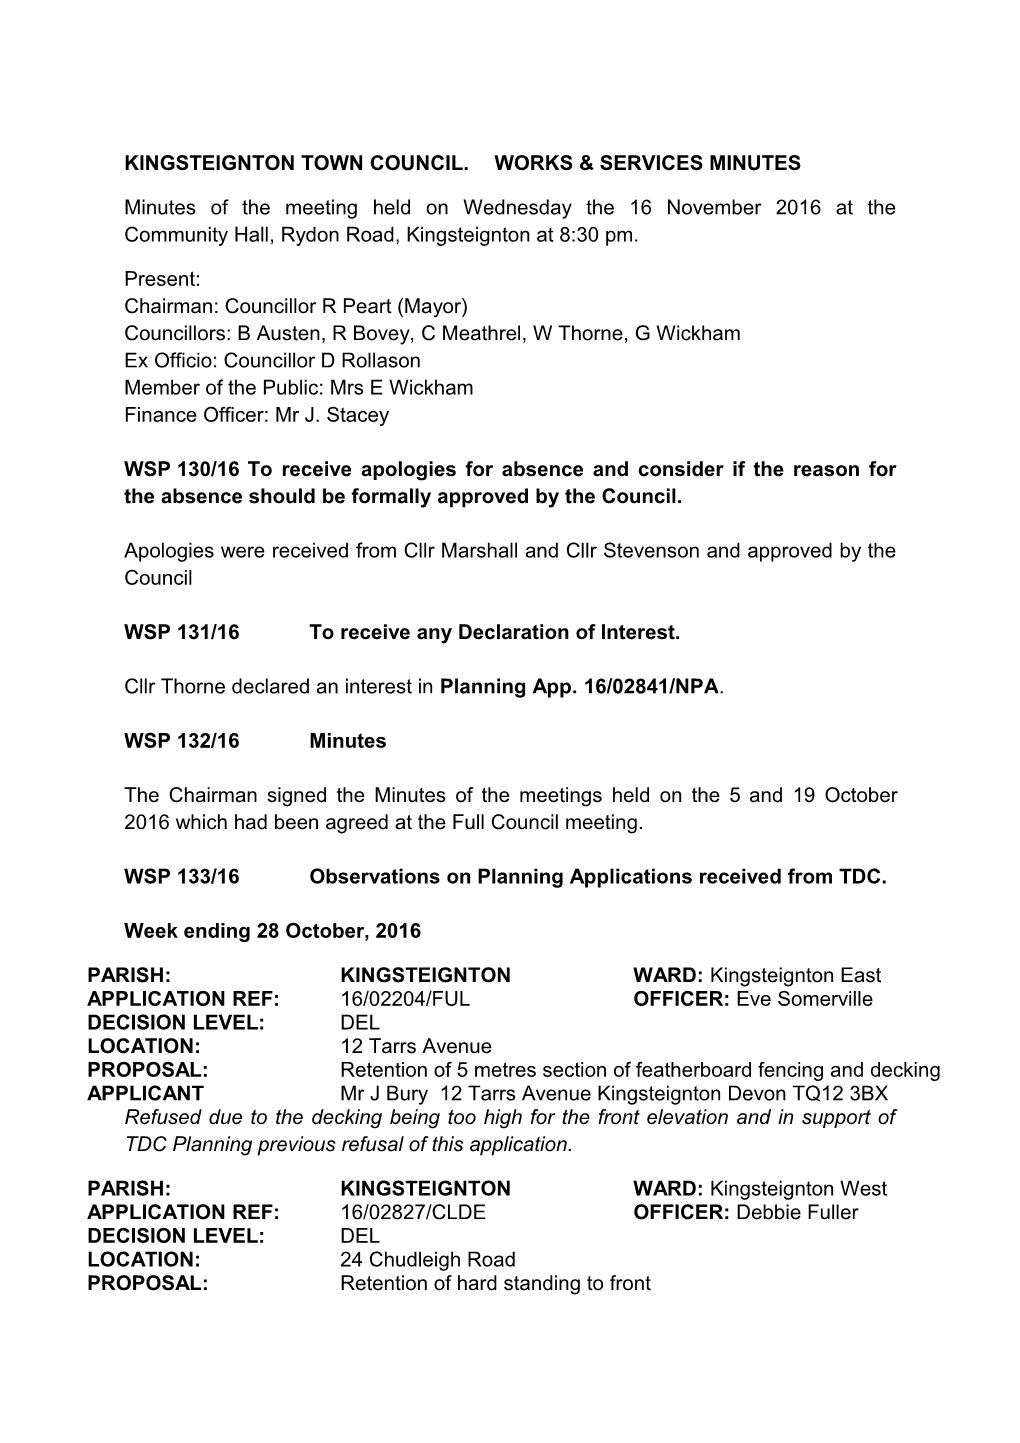 Kingsteignton Town Council. Works & Services Minutes